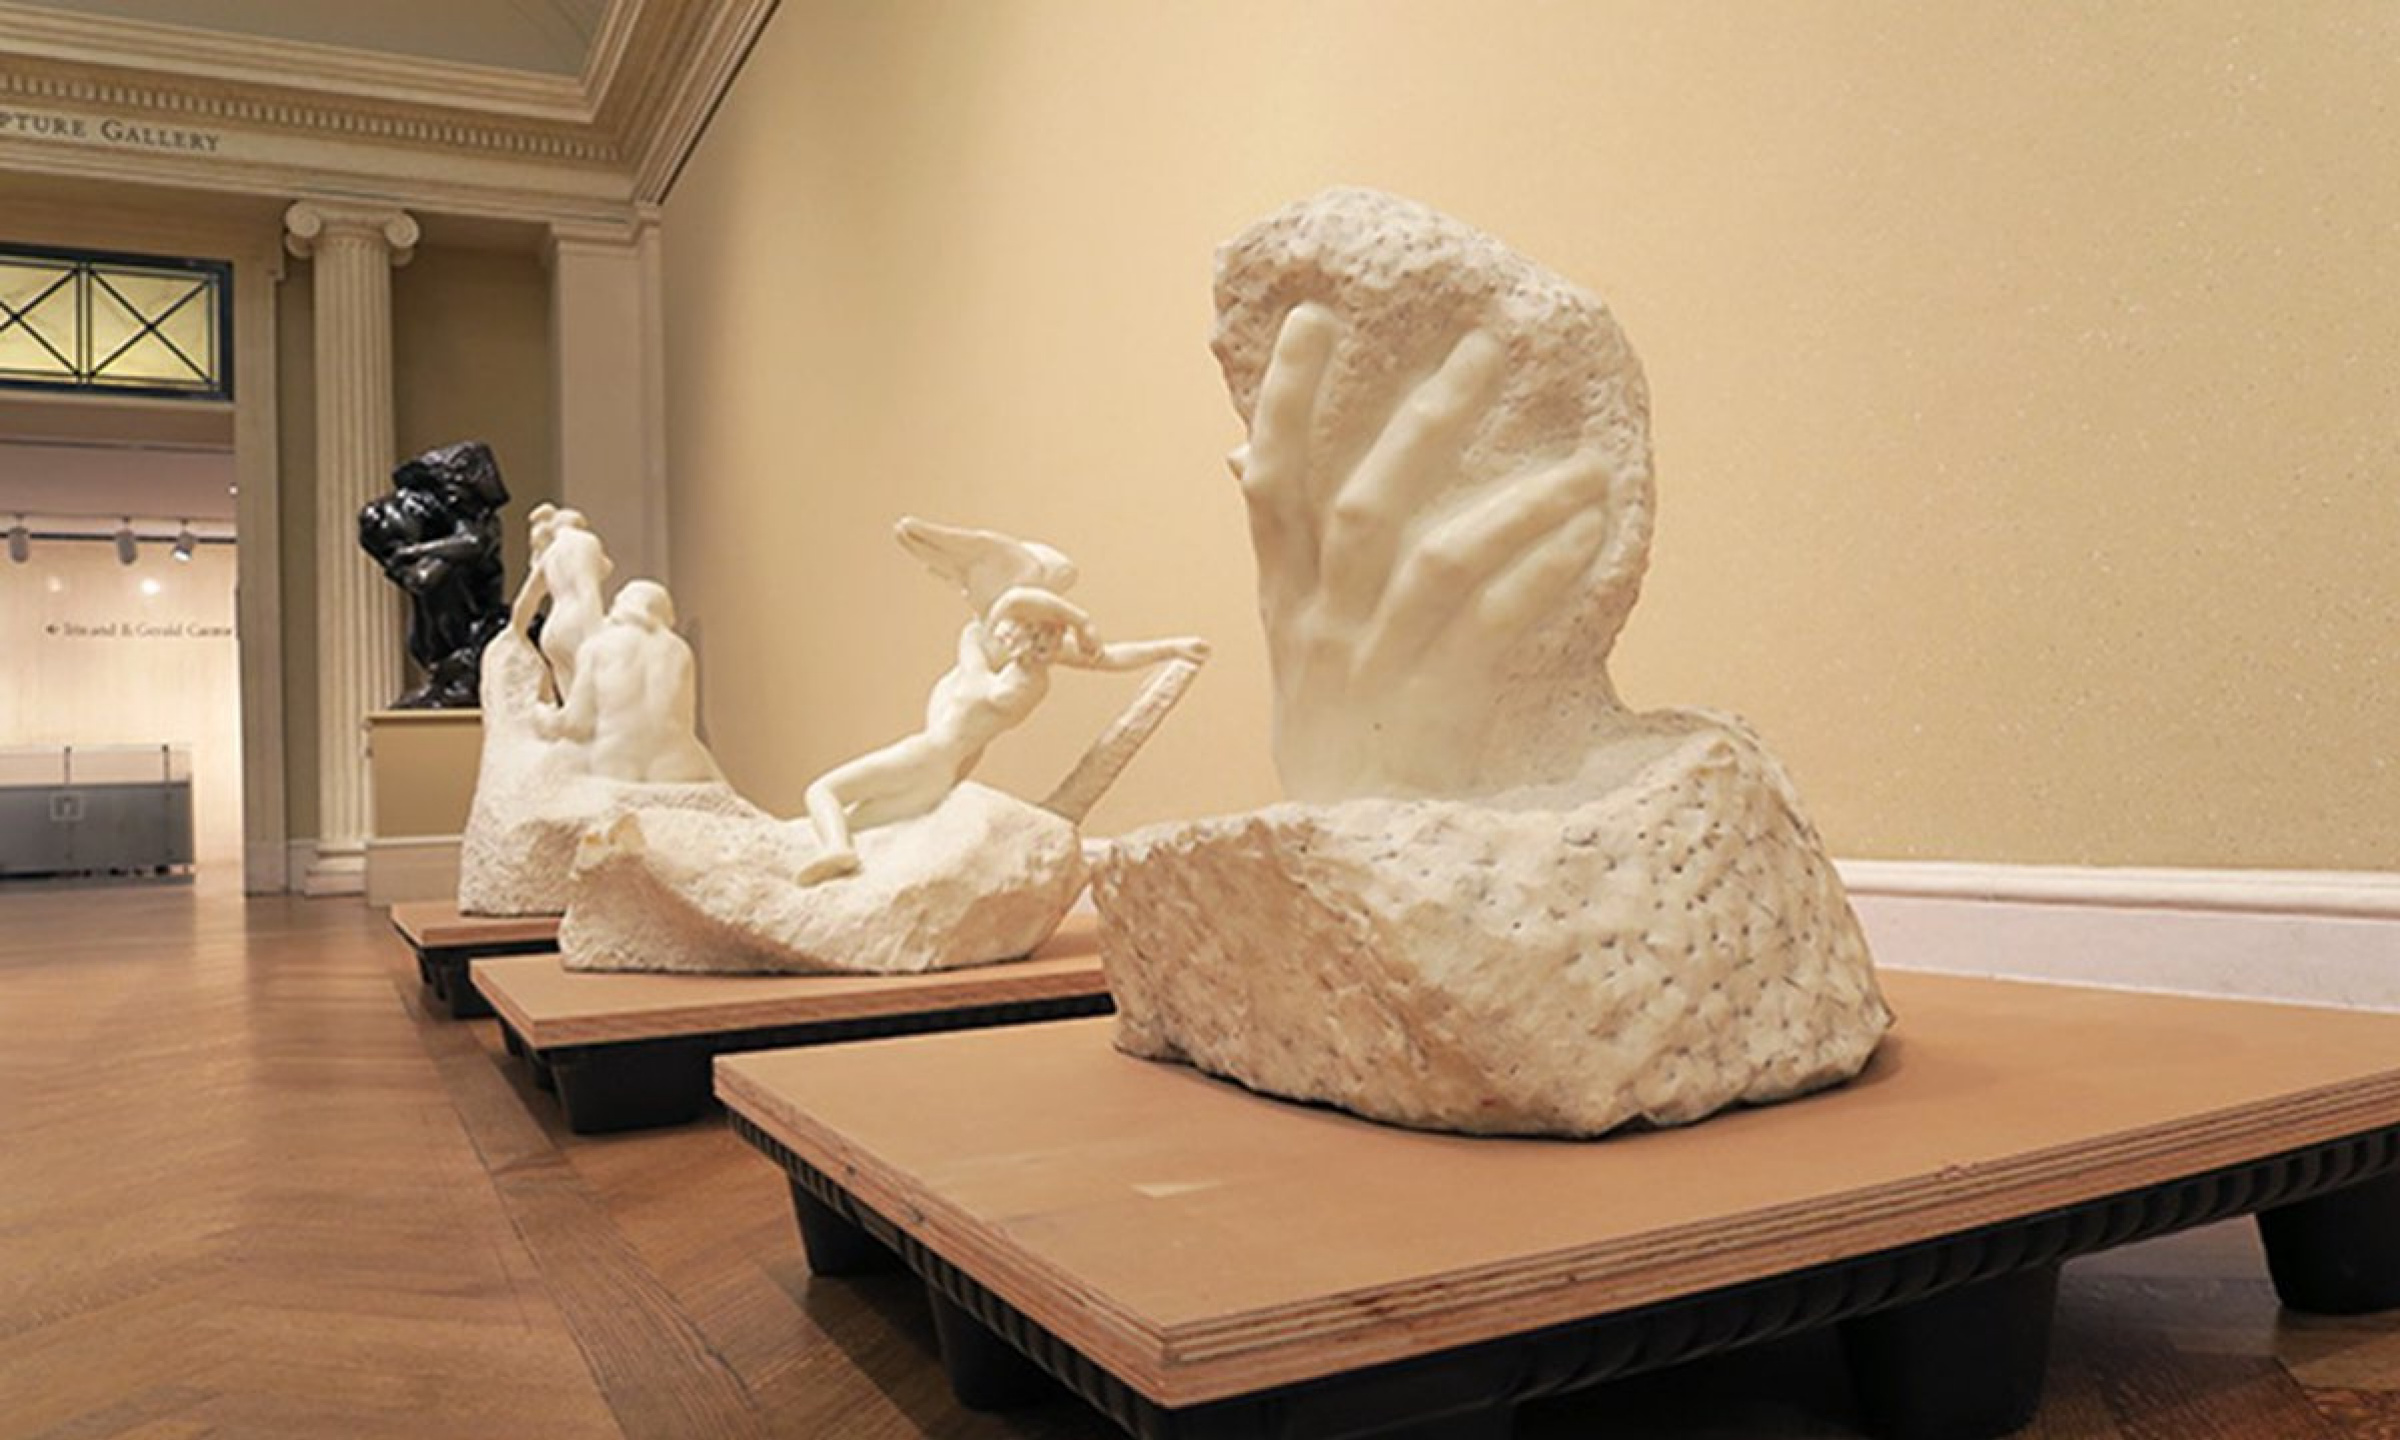 Auguste Rodin: 5 Sculptures of Hands - - Exhibitions - Jill